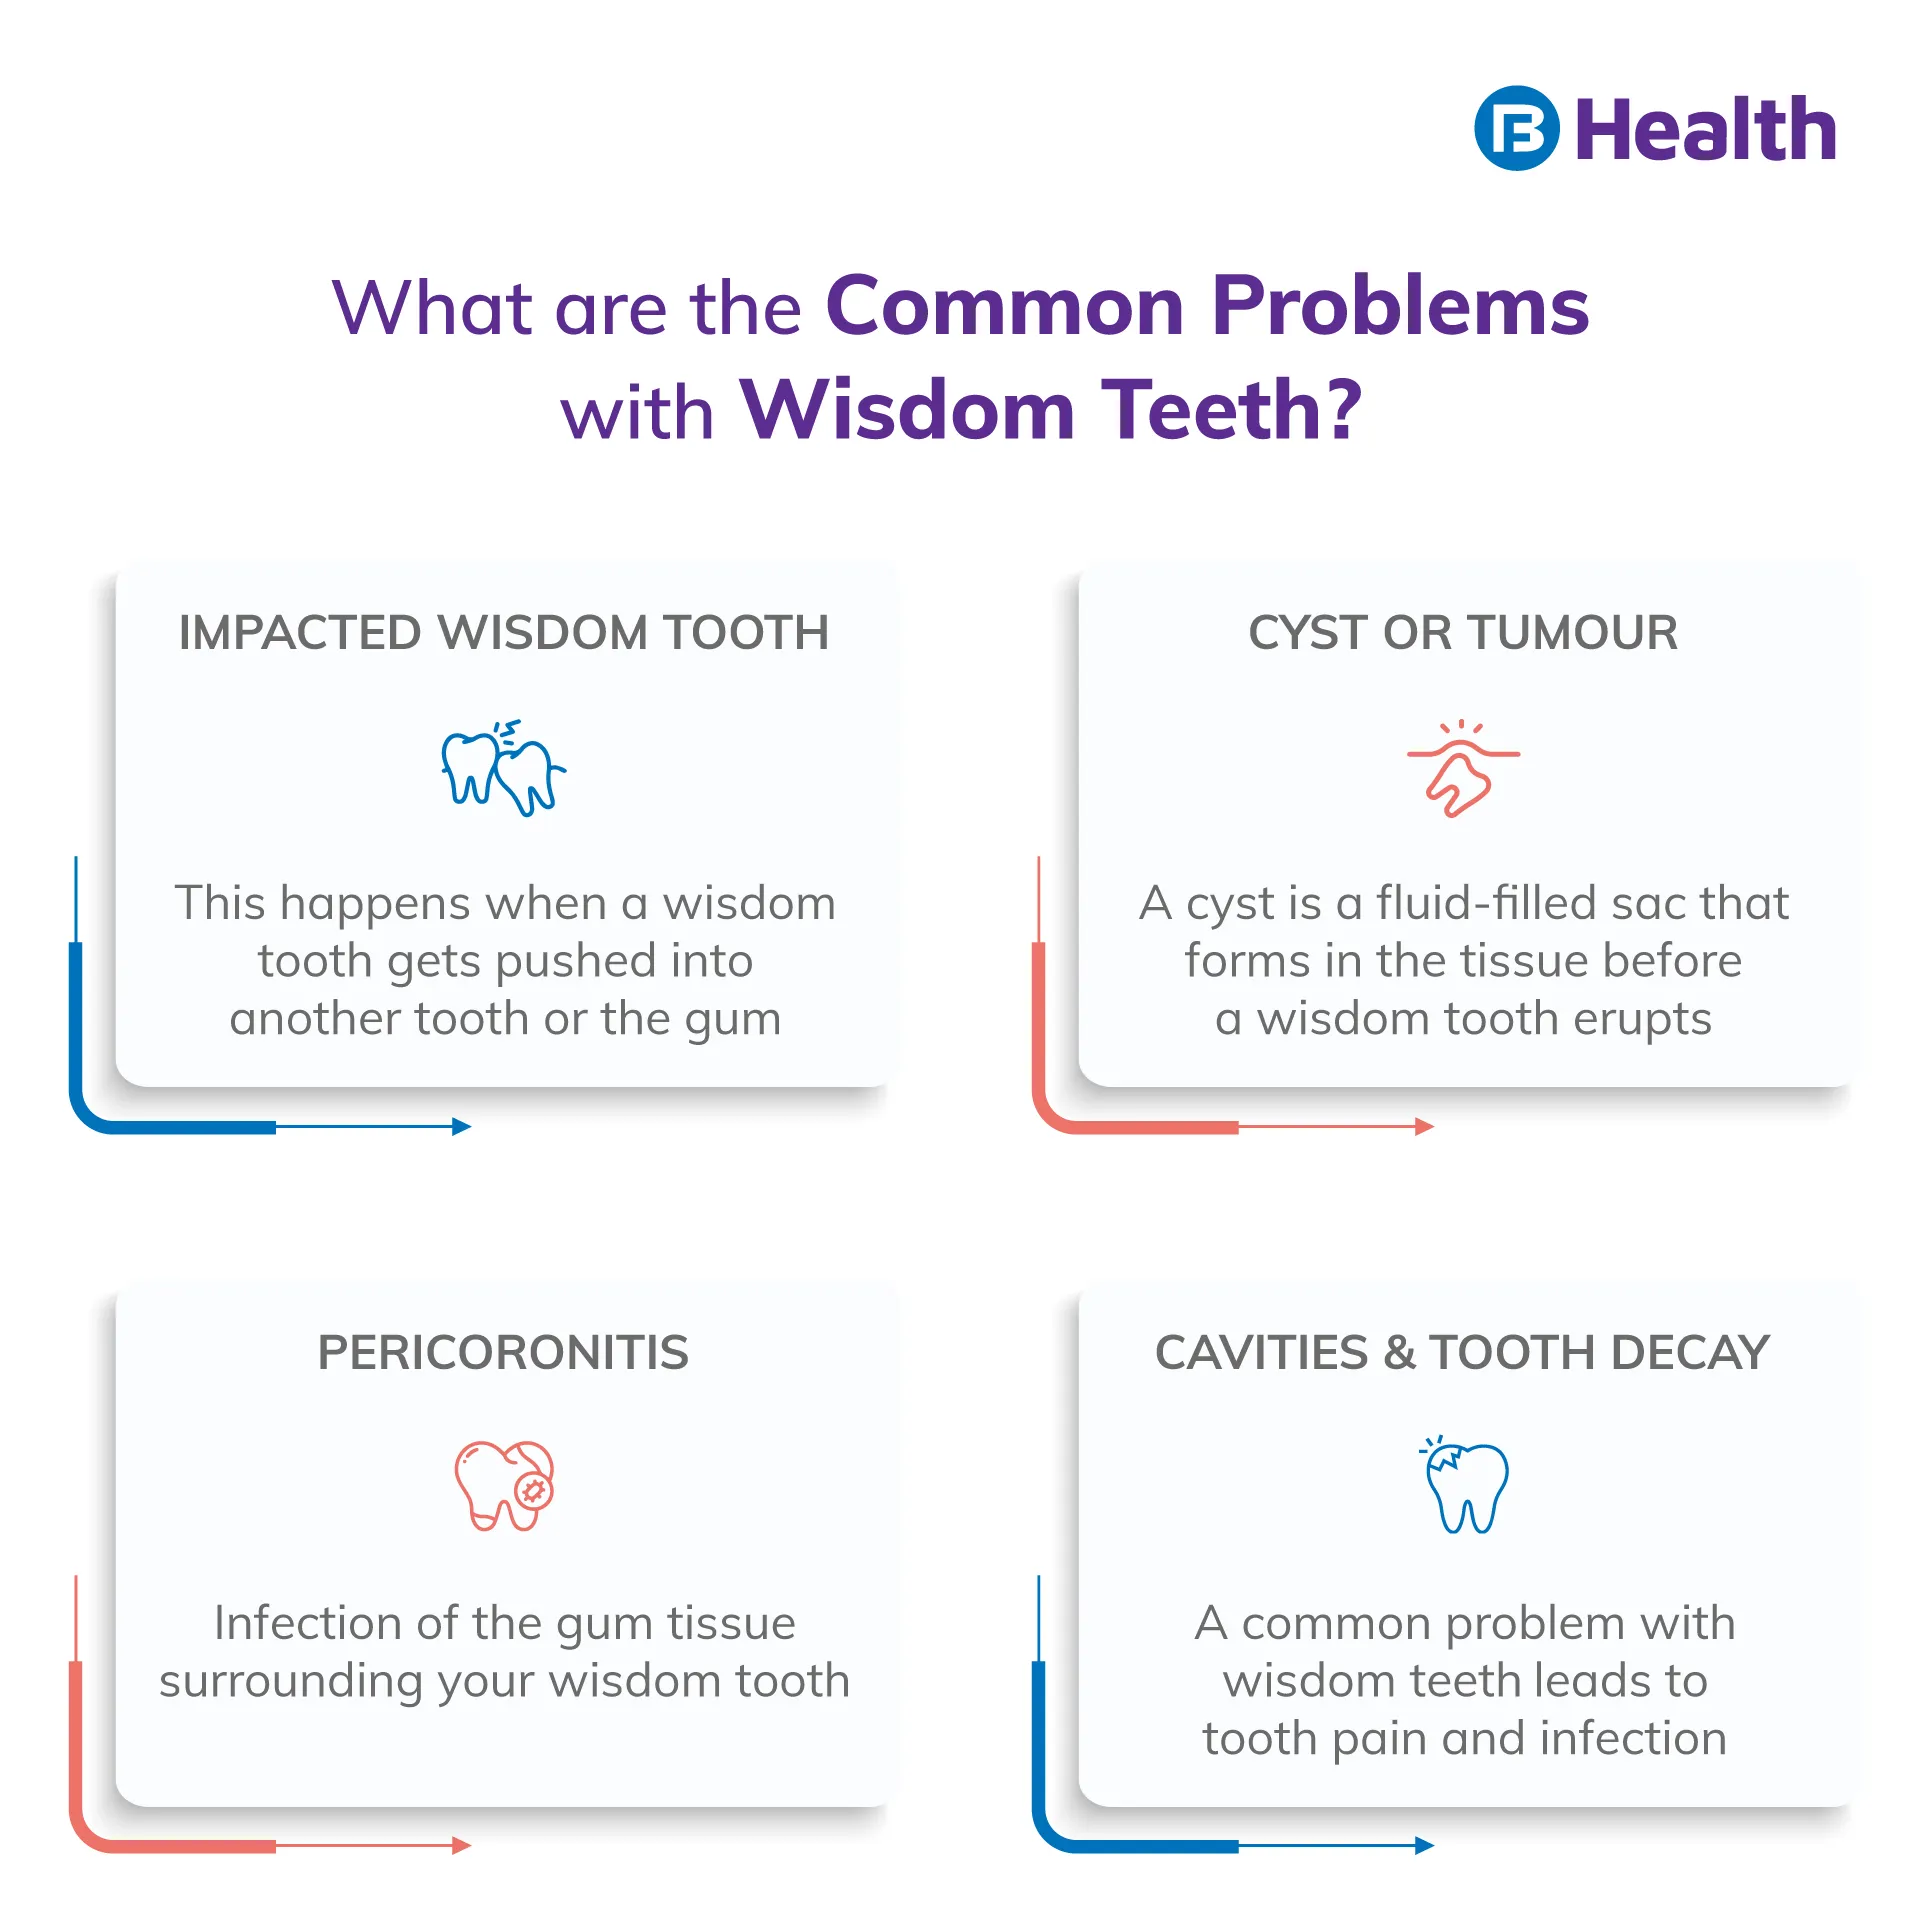 Problems with Wisdom Teeth